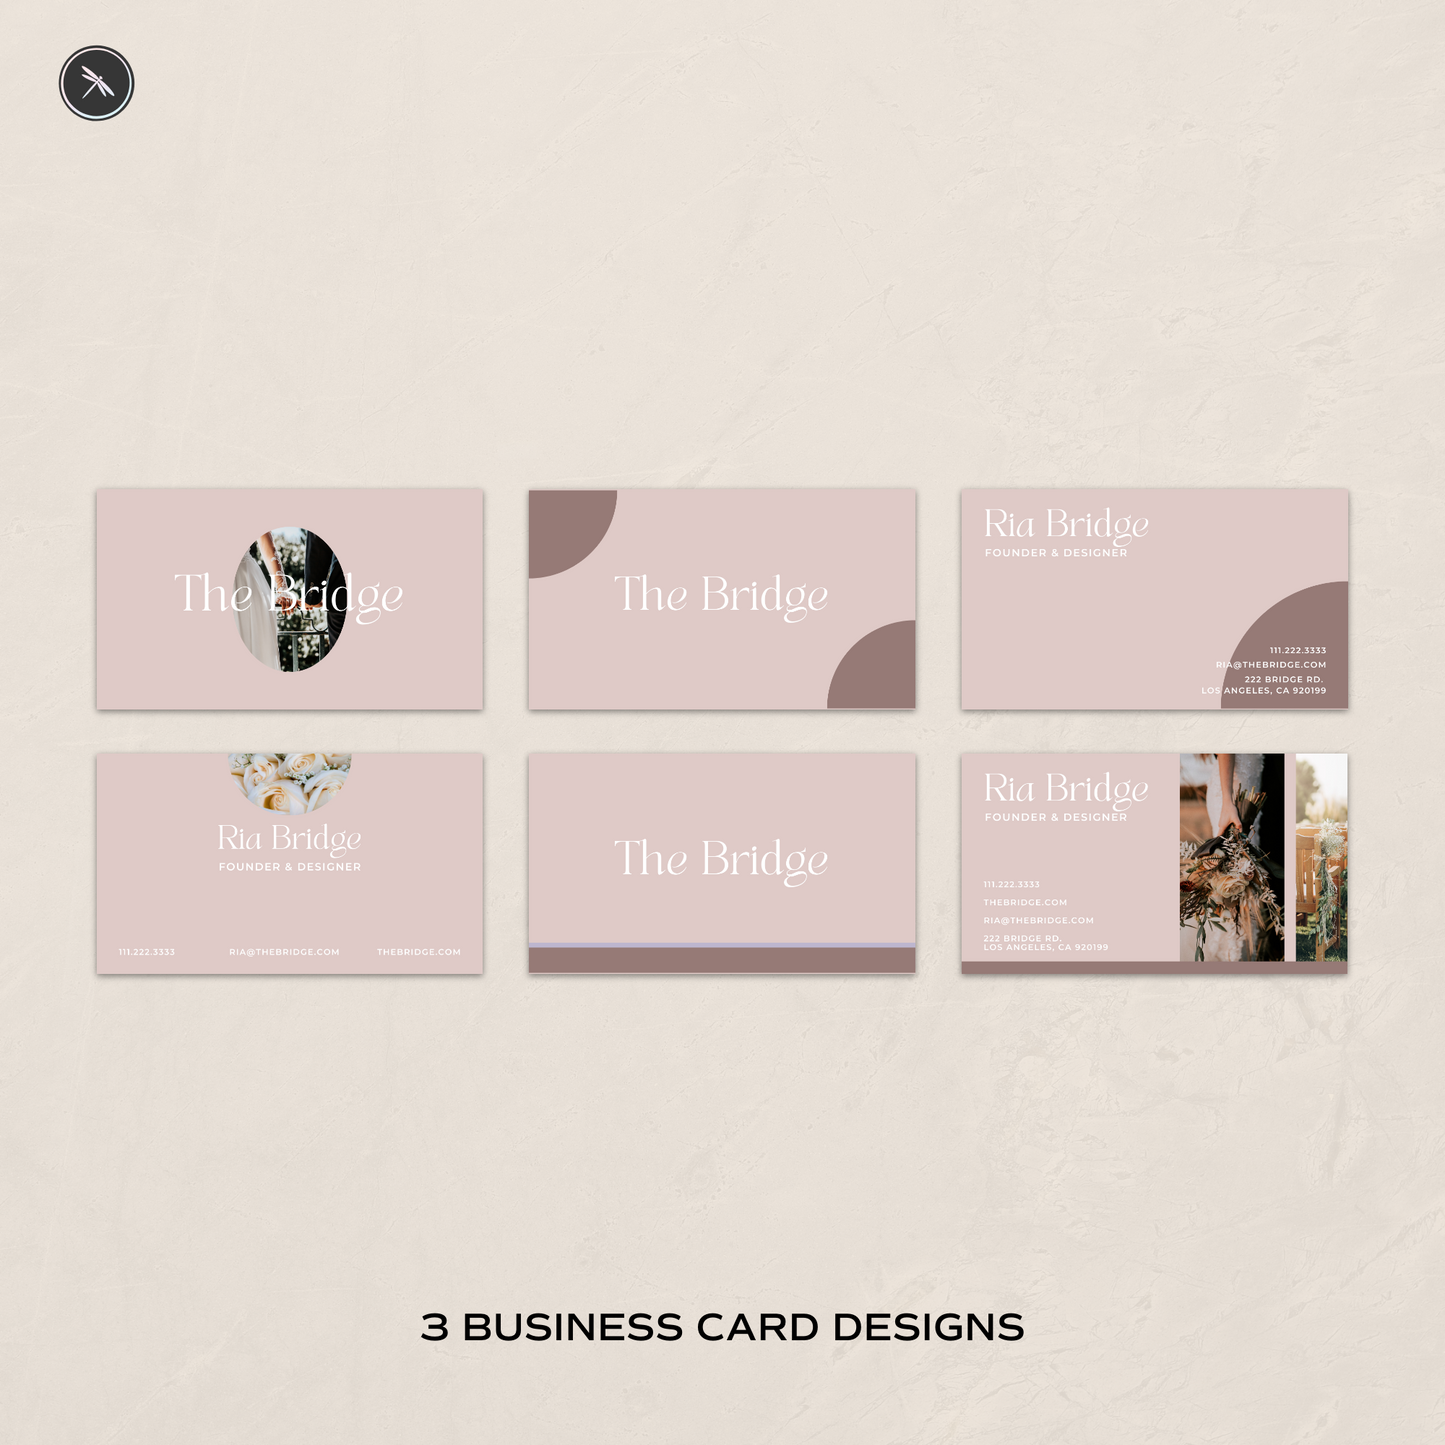 The Bridge Business Card Template | Adobe XD & Canva